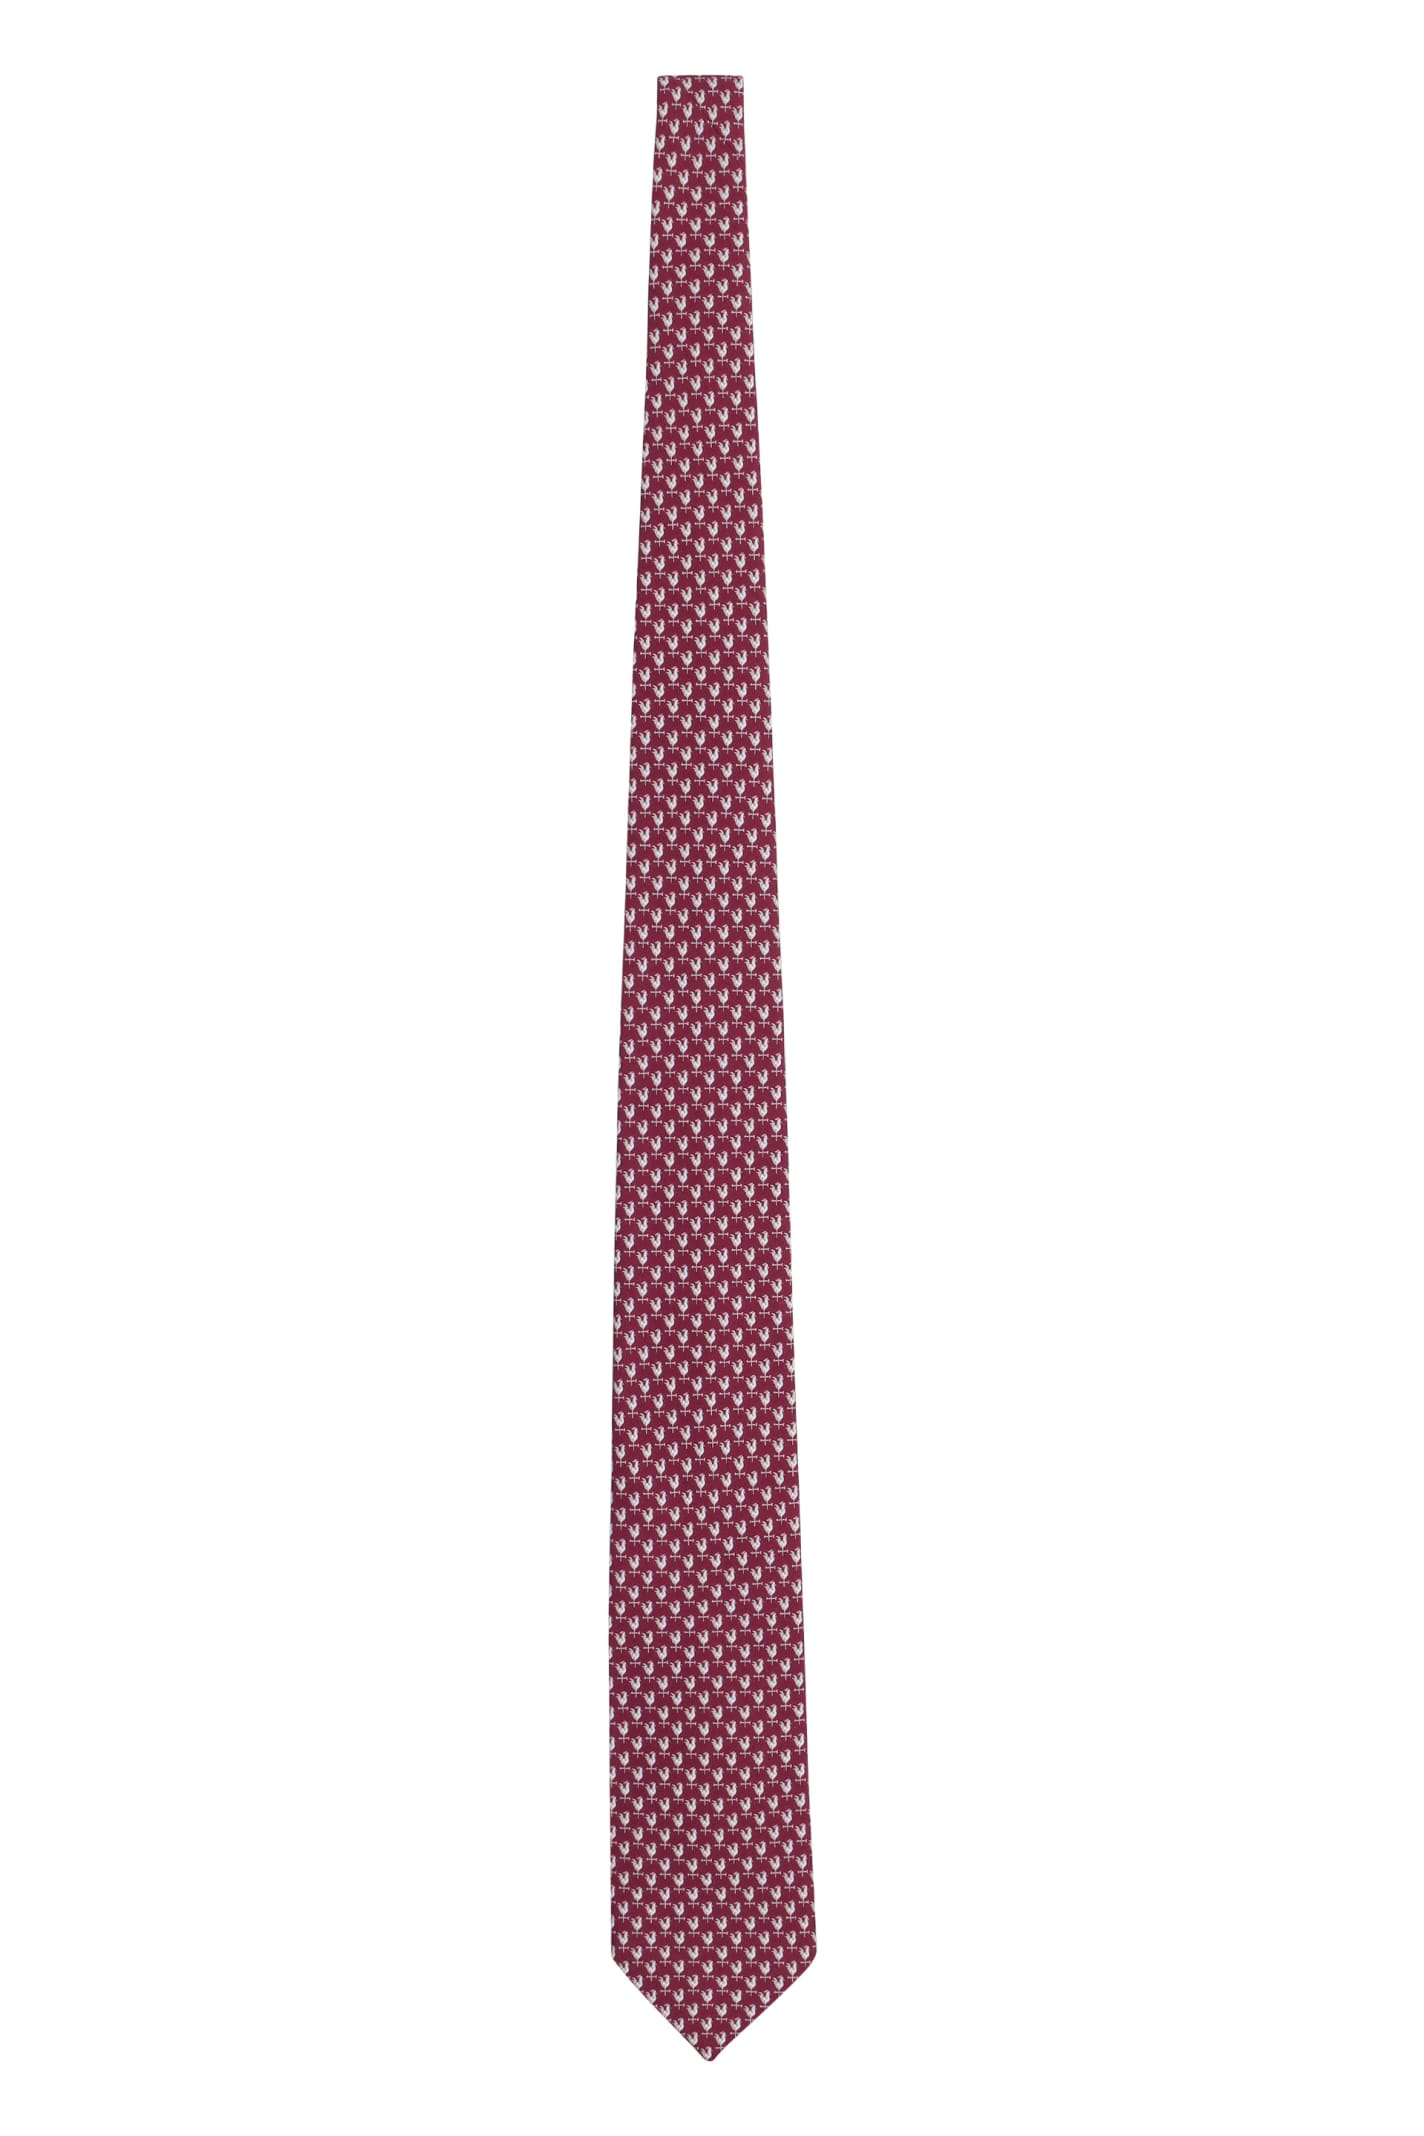 Salvatore Ferragamo Printed Silk Tie